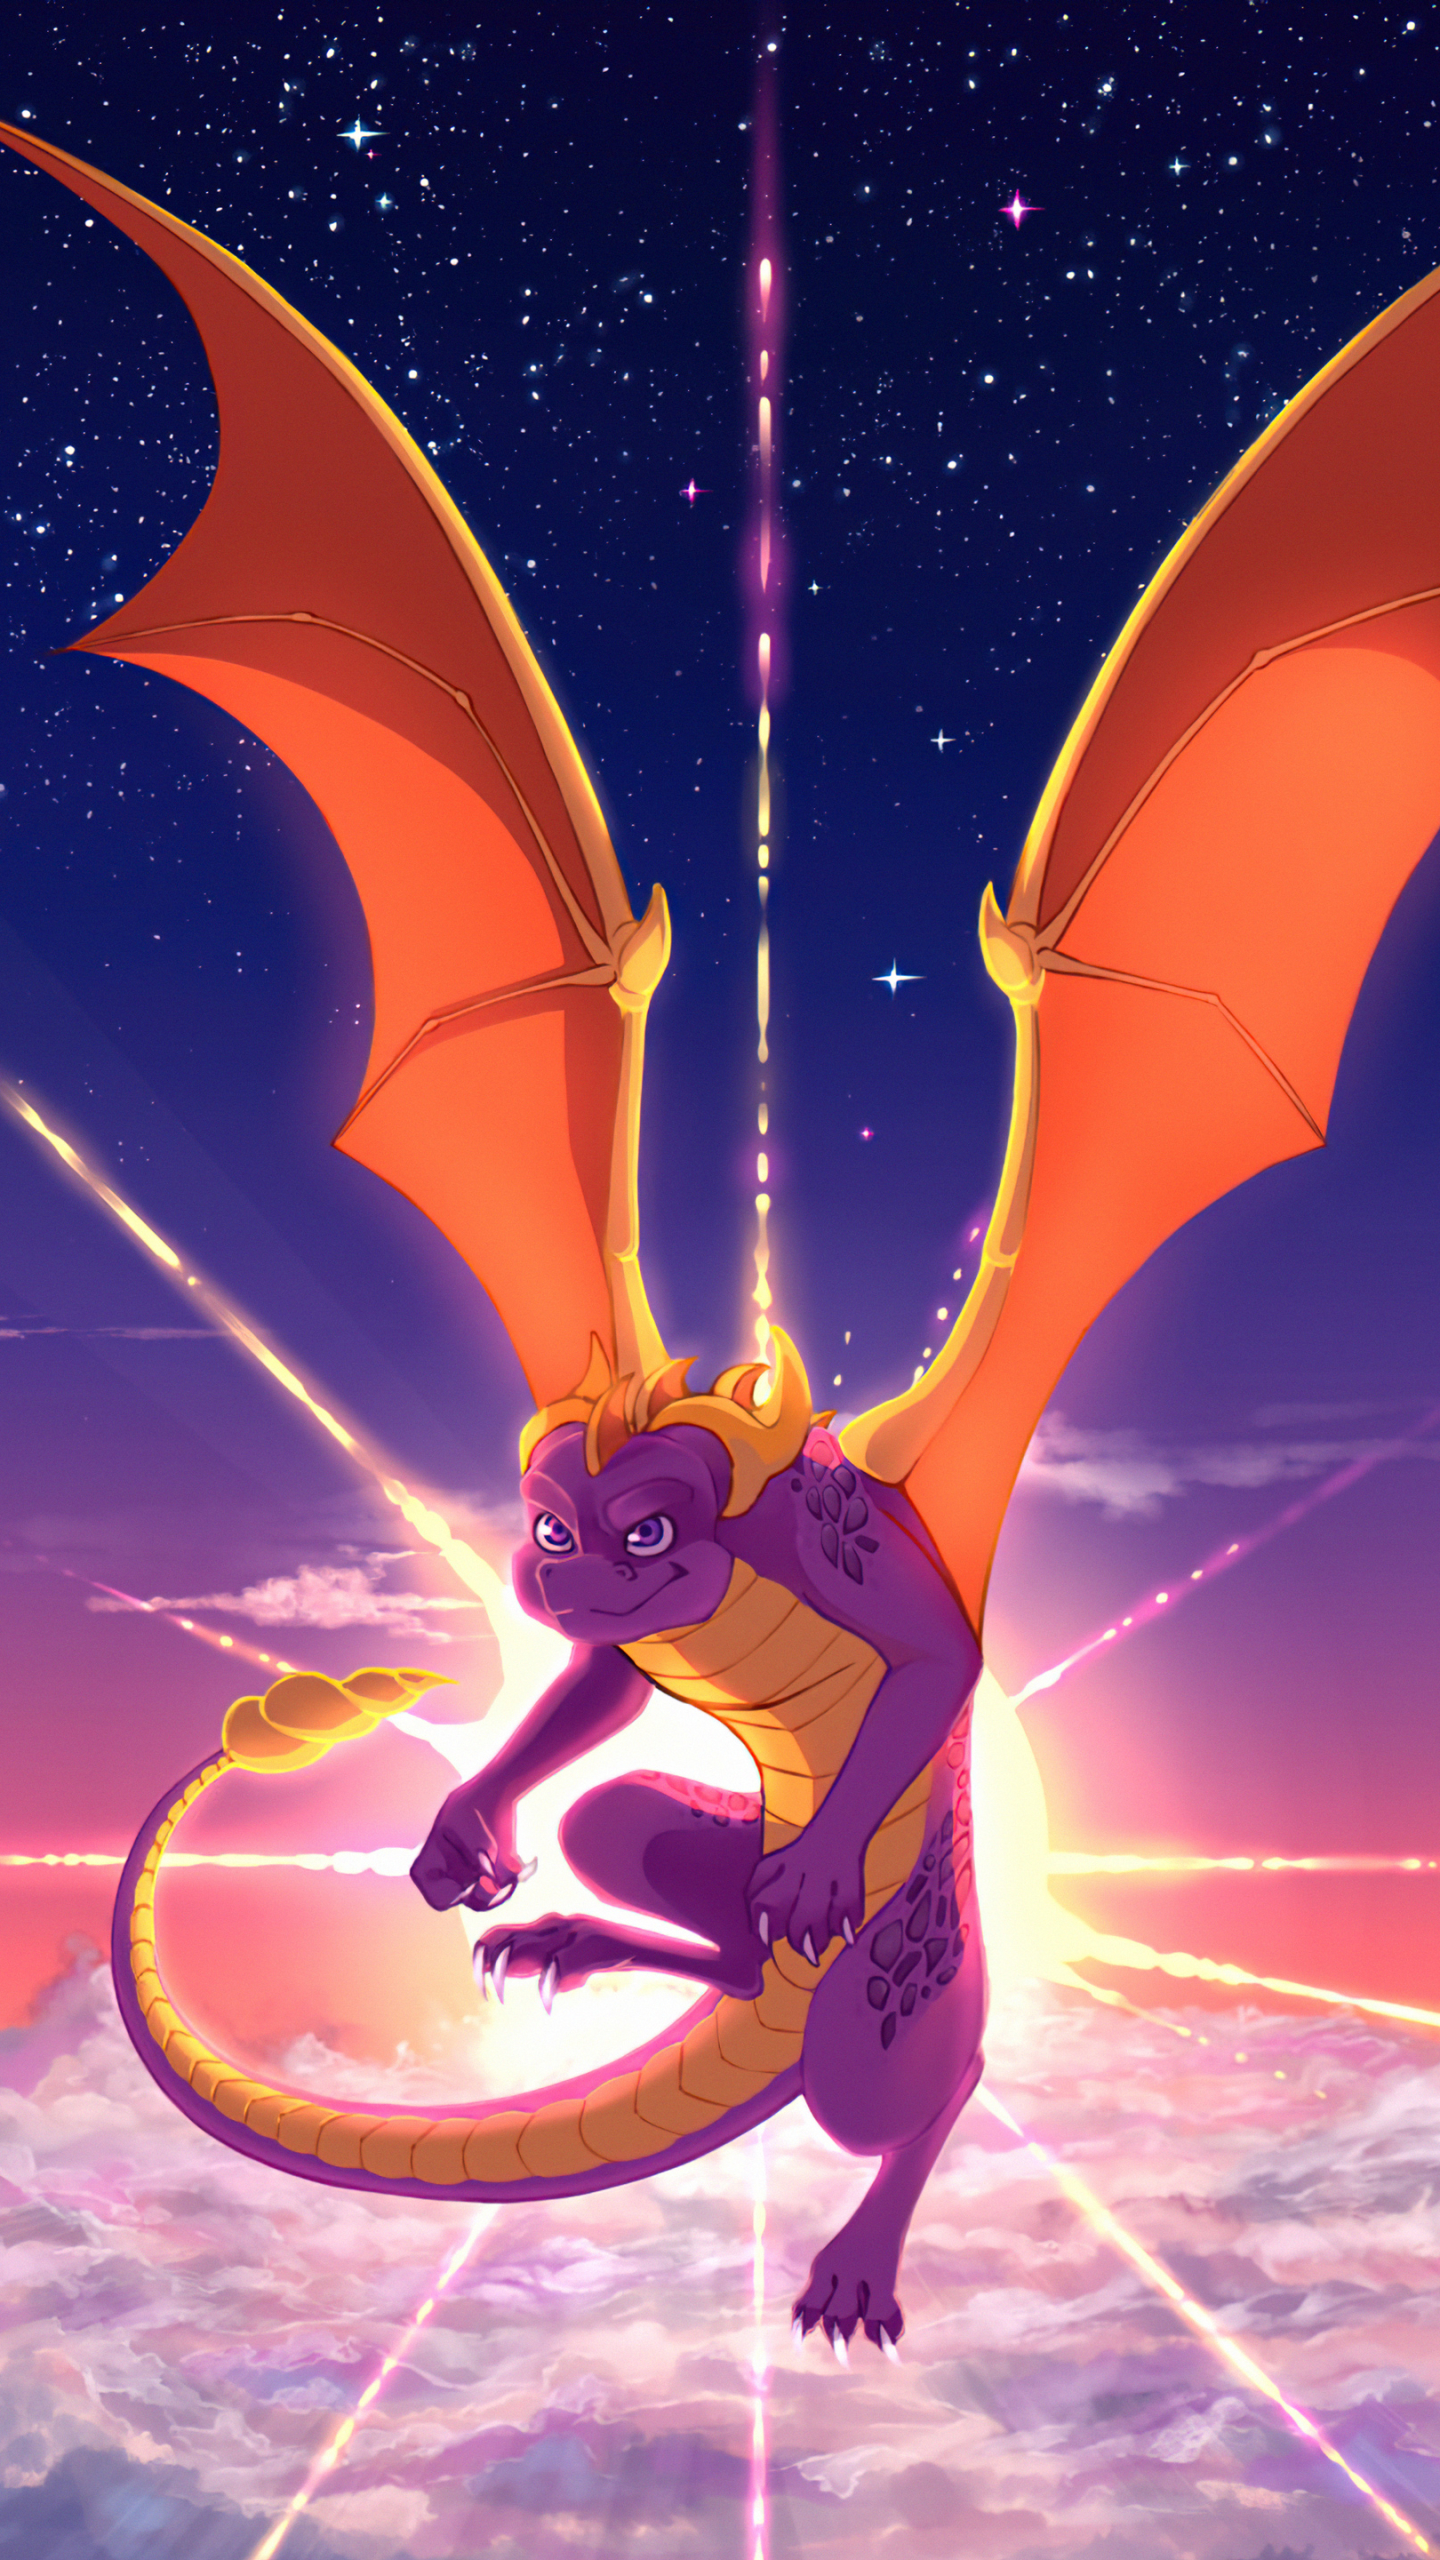 Spyro the Dragon Phone Wallpaper by coline EMANUEL